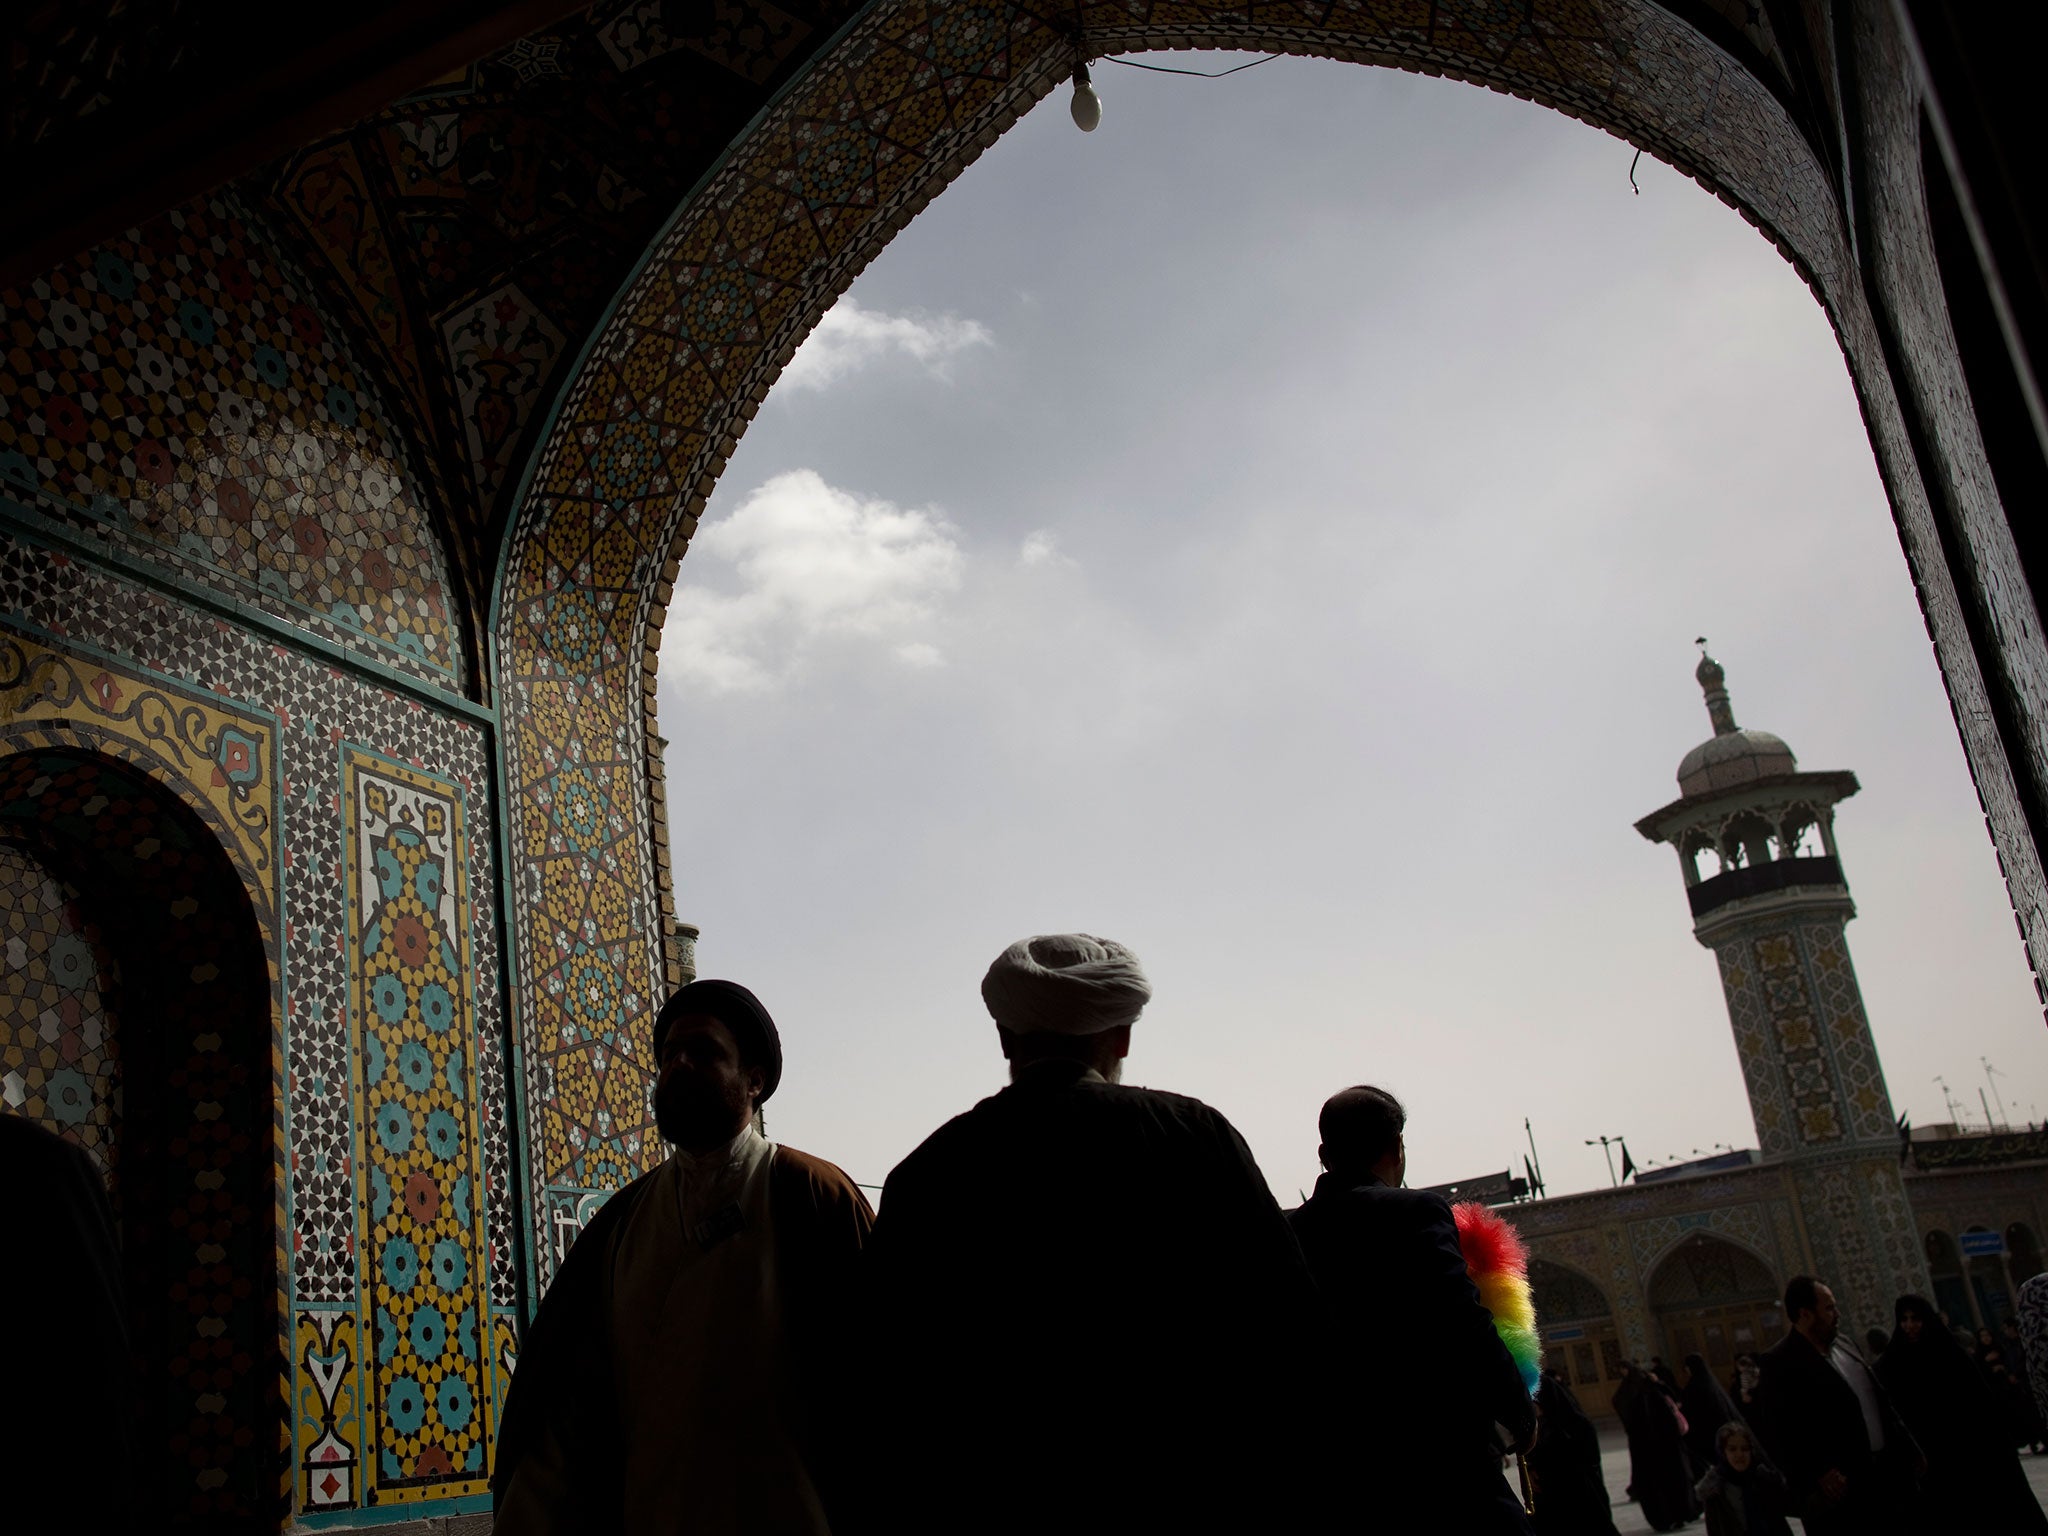 Iran uses a strict interpretation of sharia law